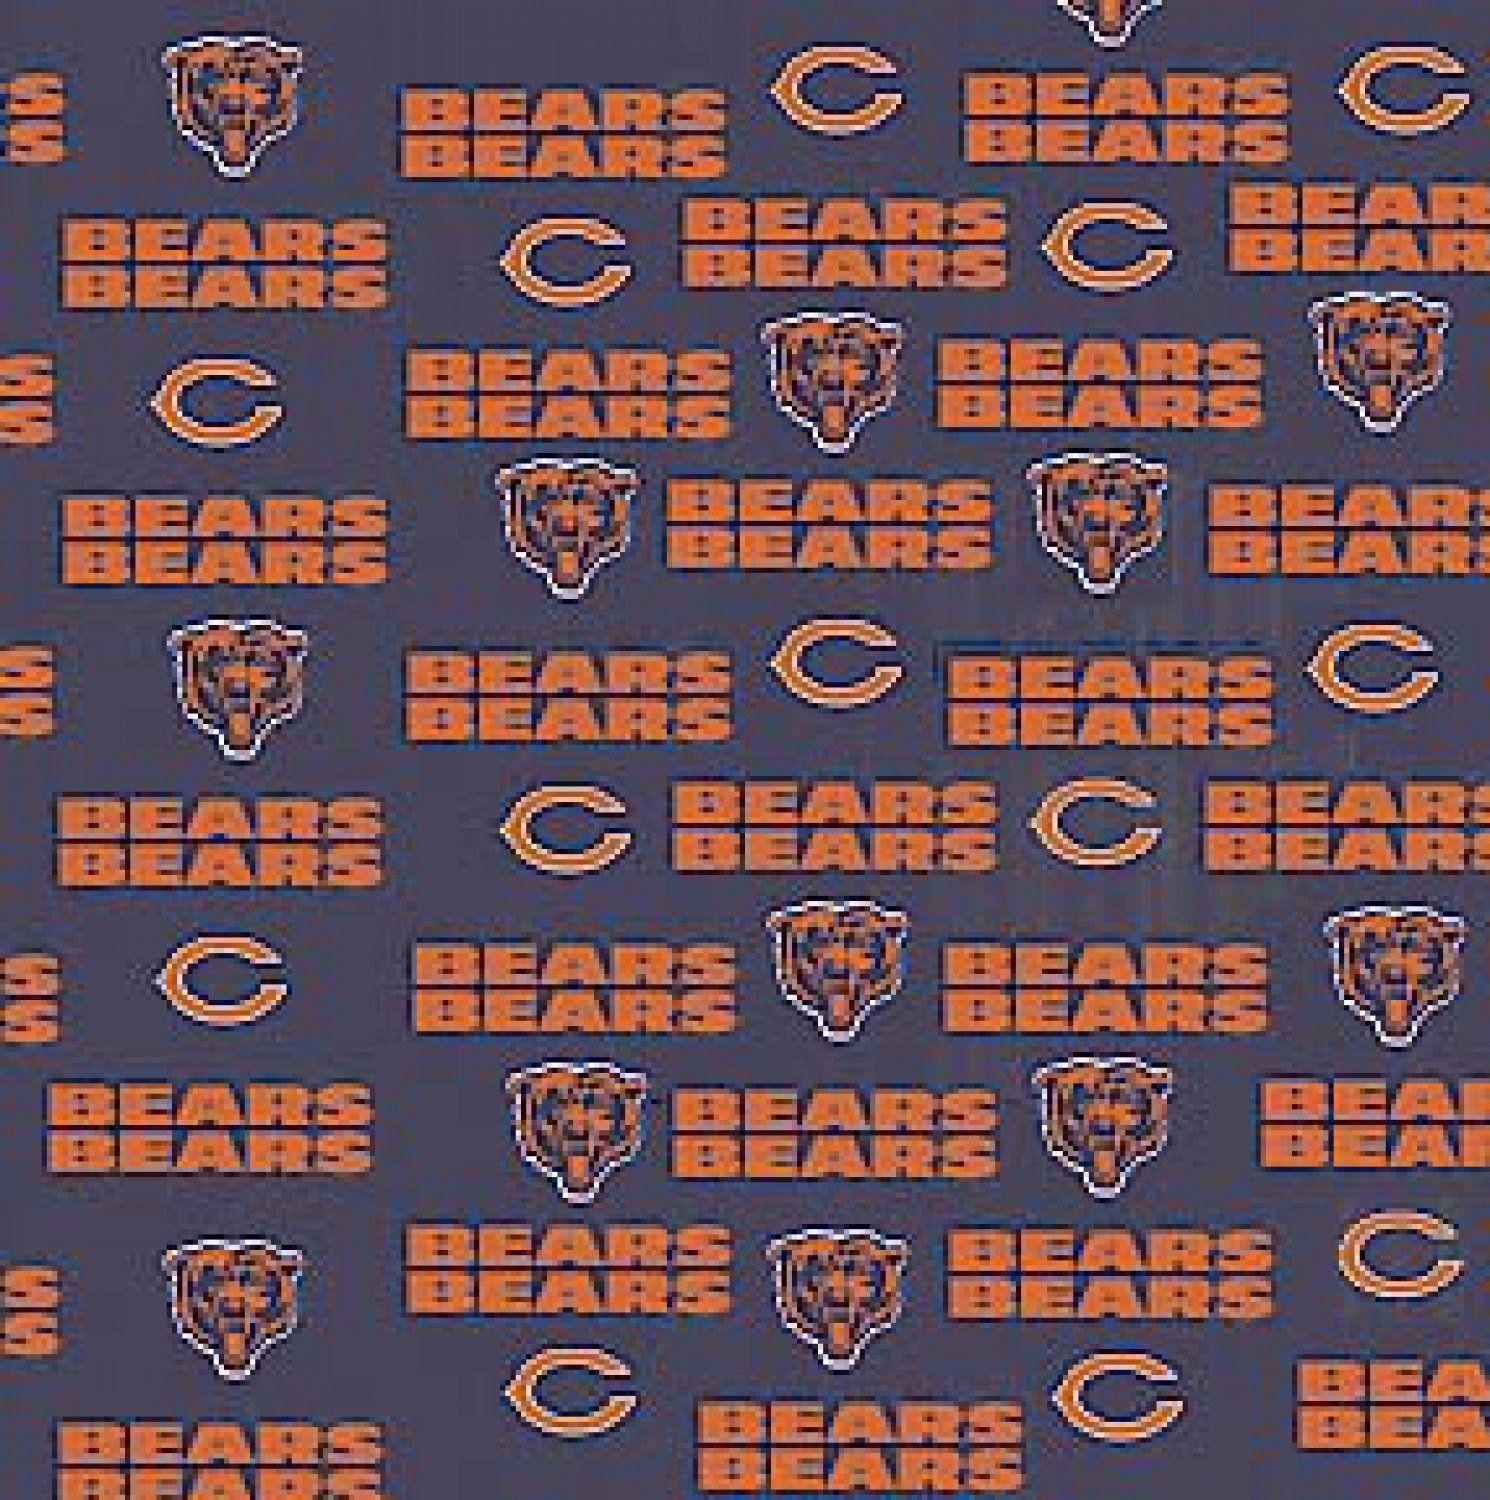 Bears C Logo - Chicago Bears fabric NFL National Football League navy orange | Etsy